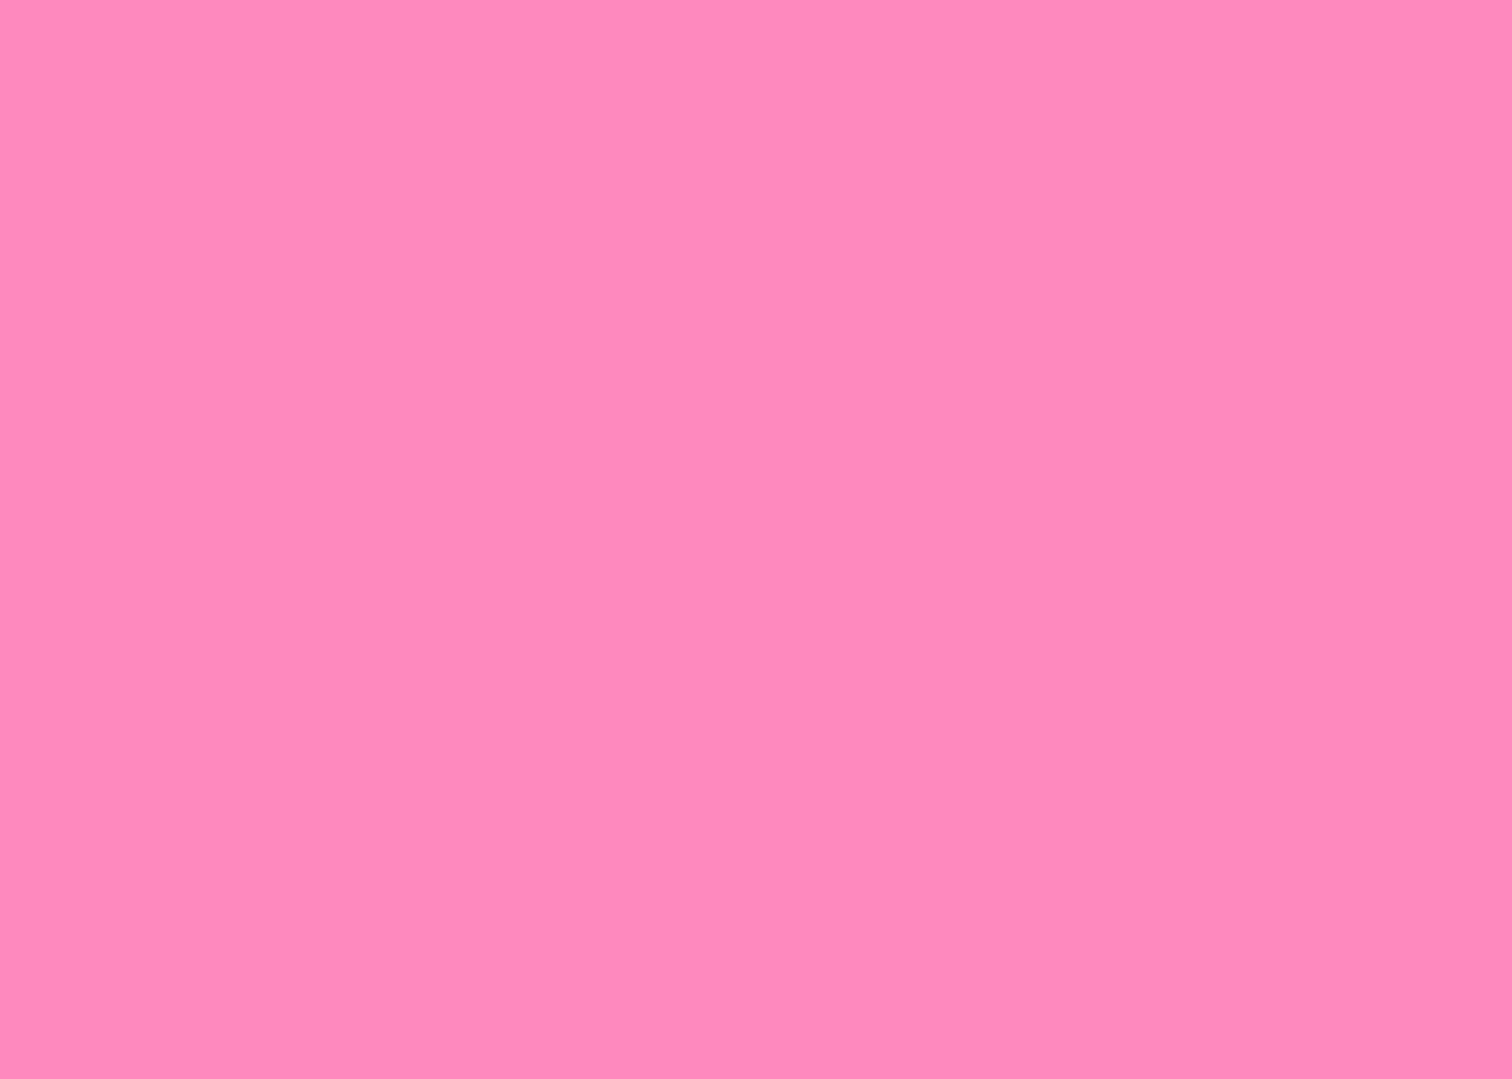 Solid Pink Background Images  Free Download on Freepik